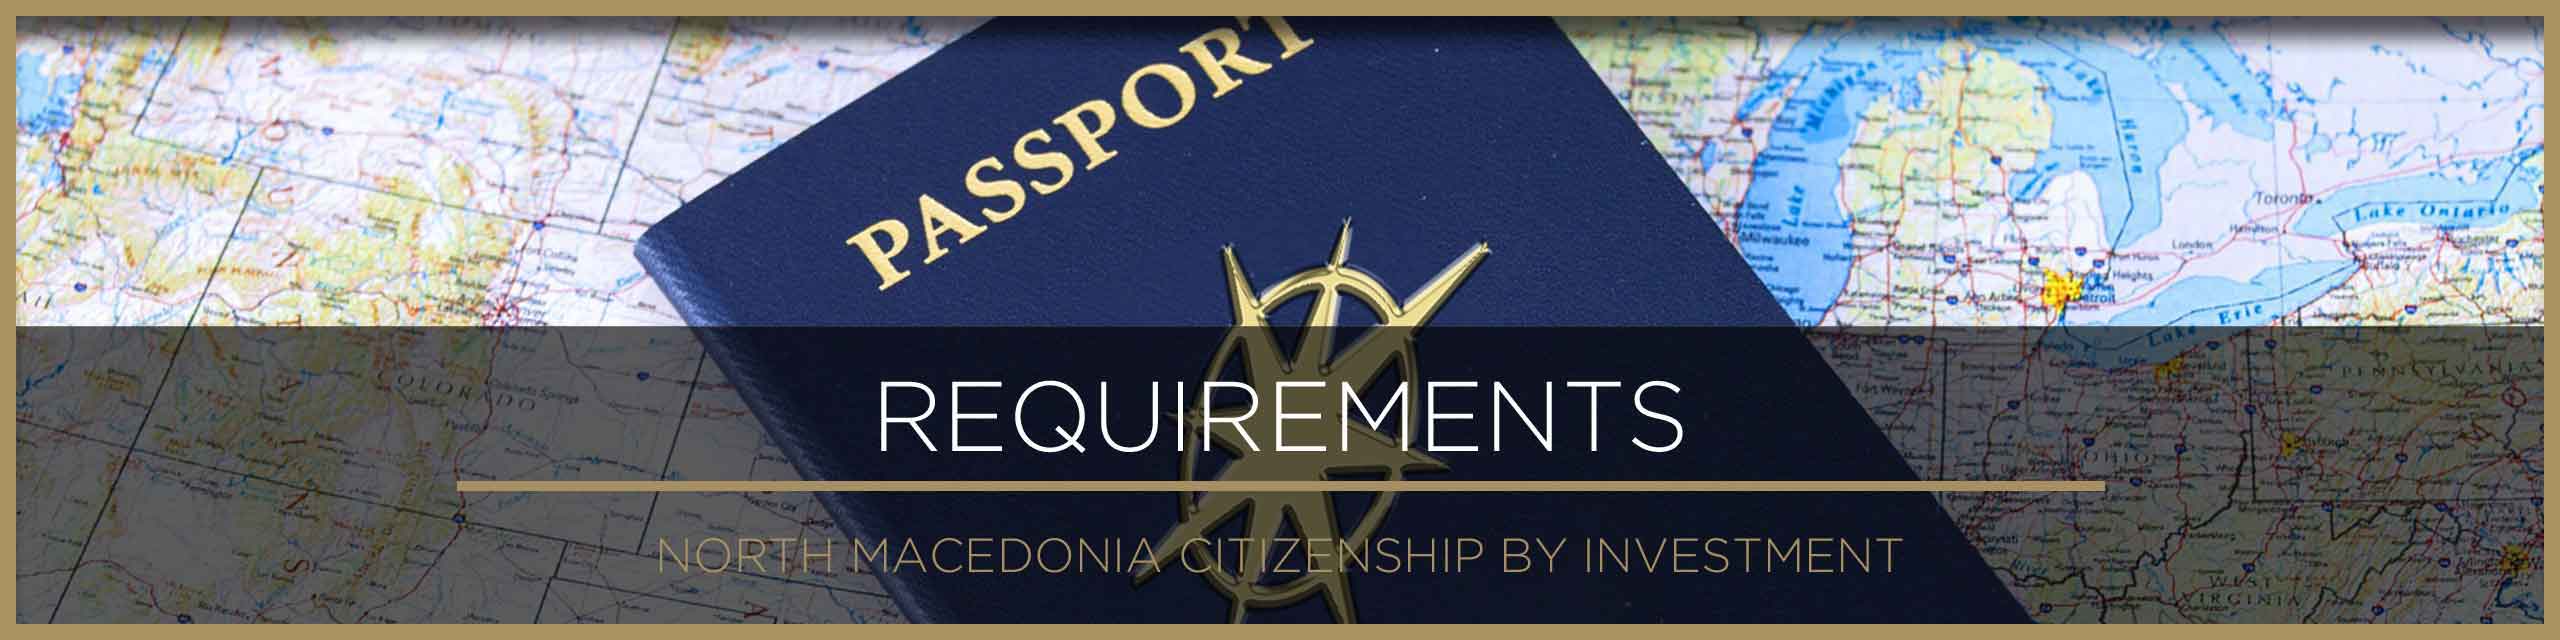 North Macedonia citizenship requirements